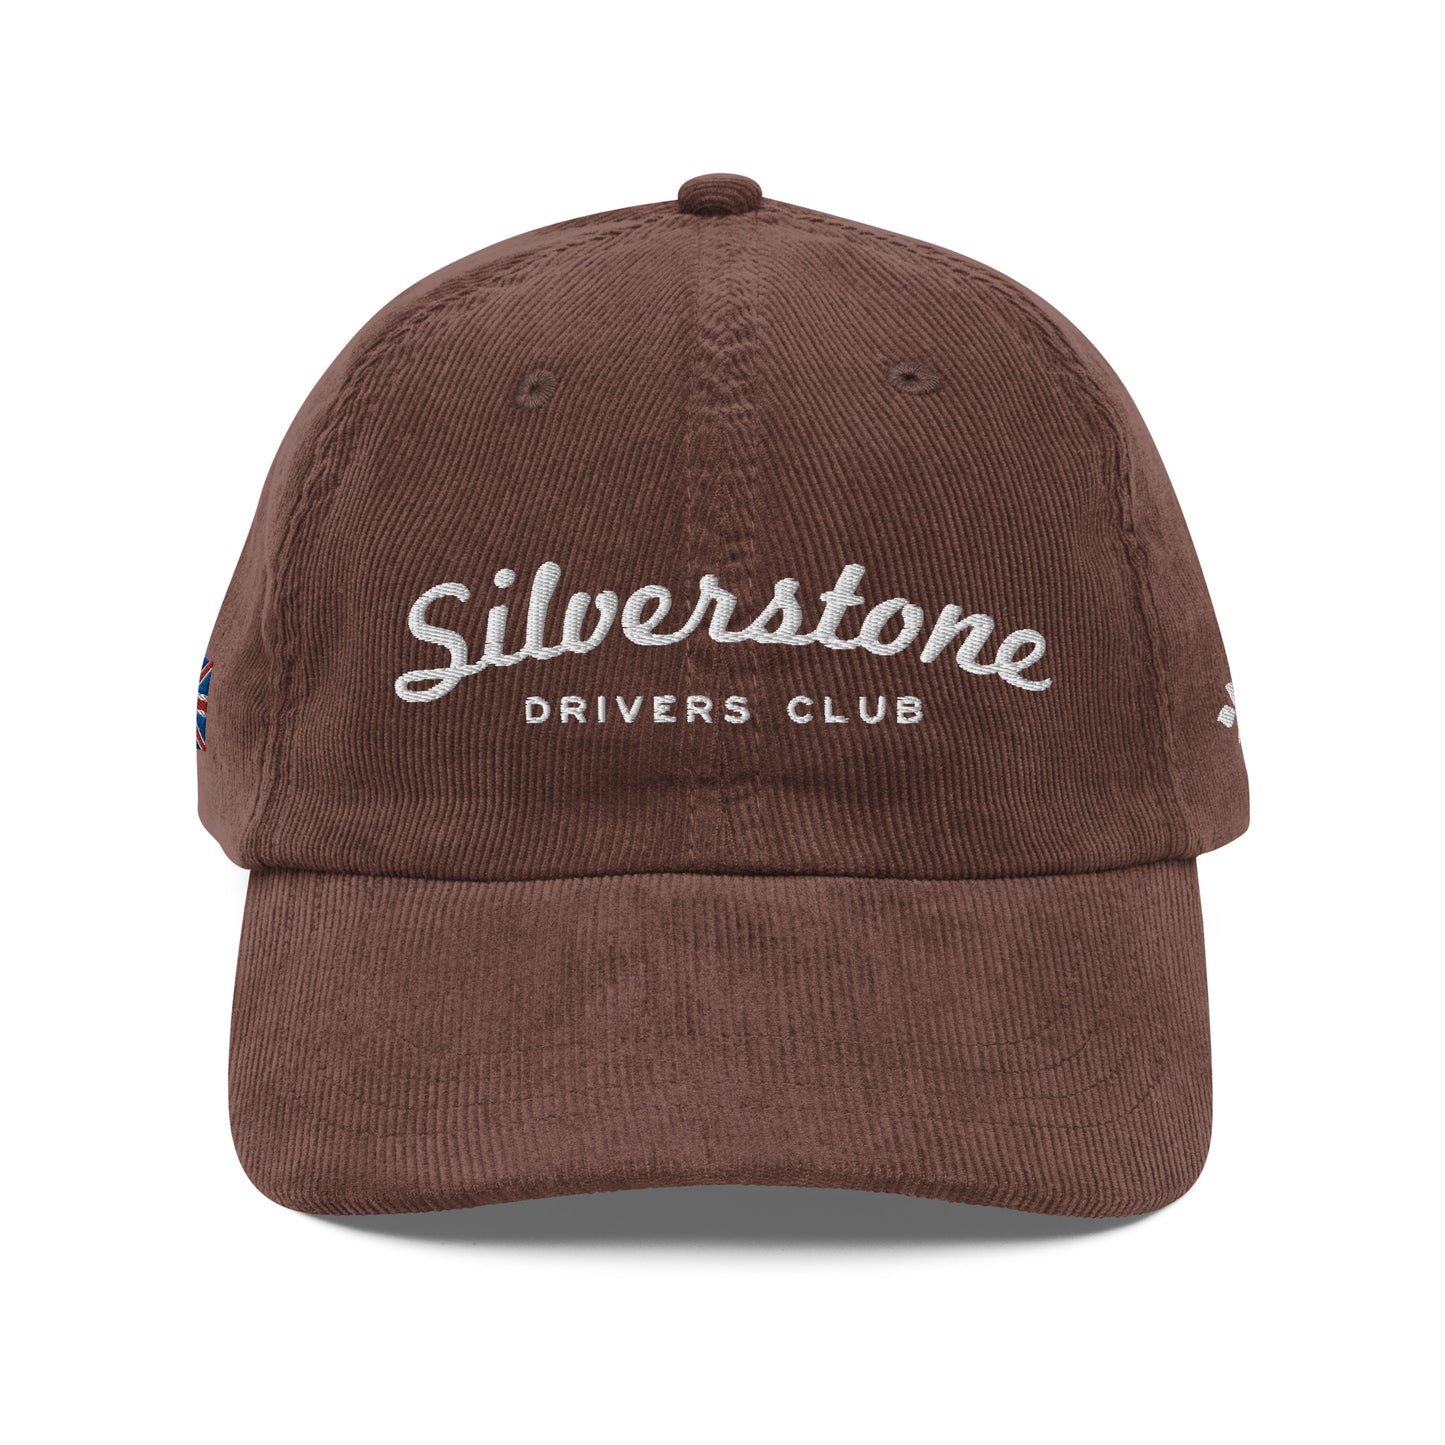 Silverstone Drivers Club Corduroy Hat